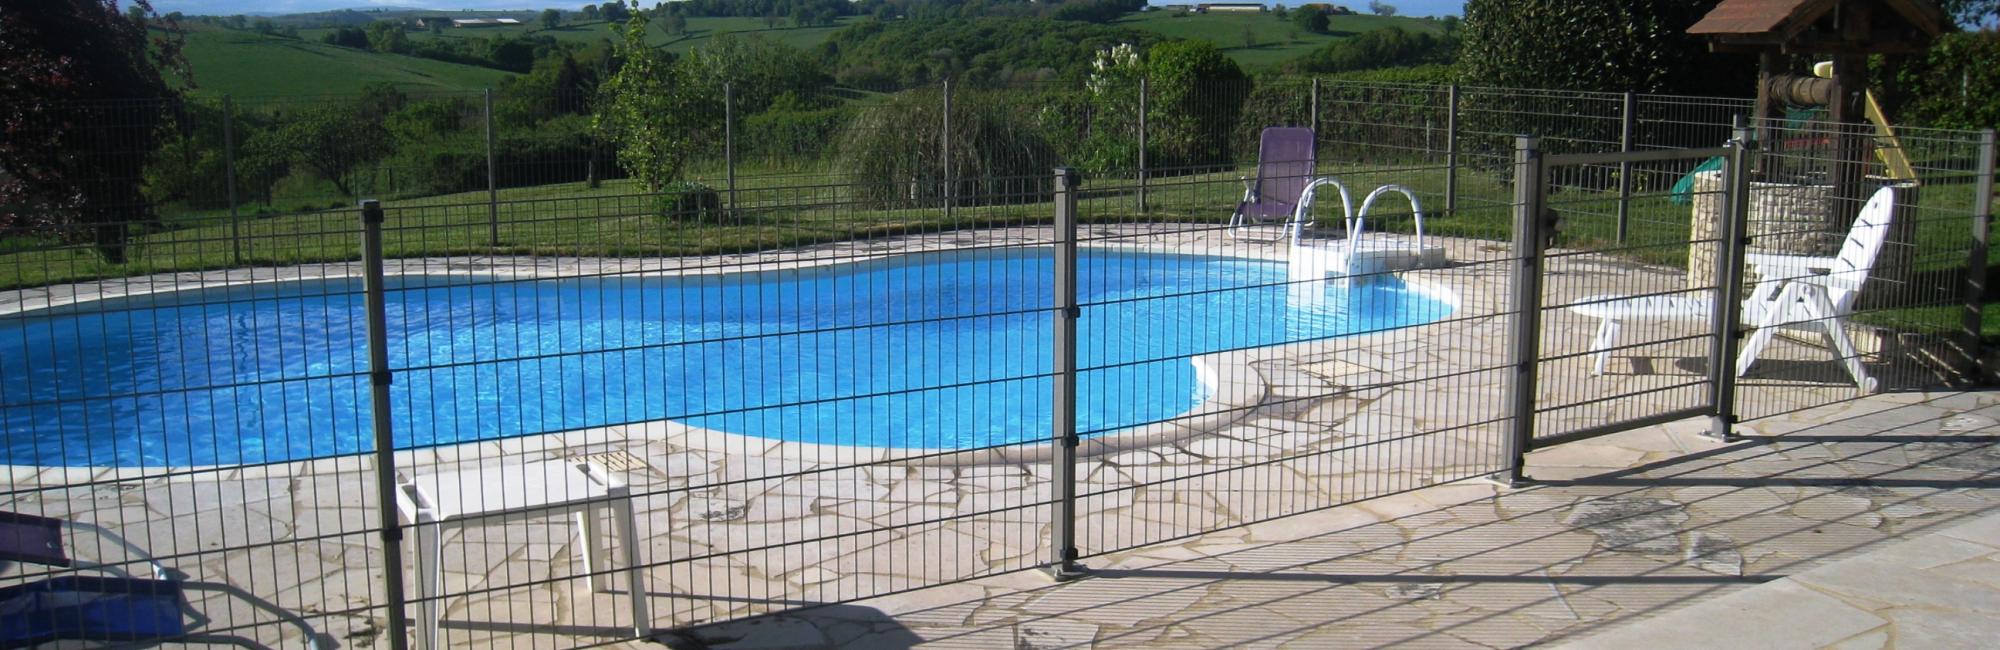 Auvergne vakantiehuis zwembad